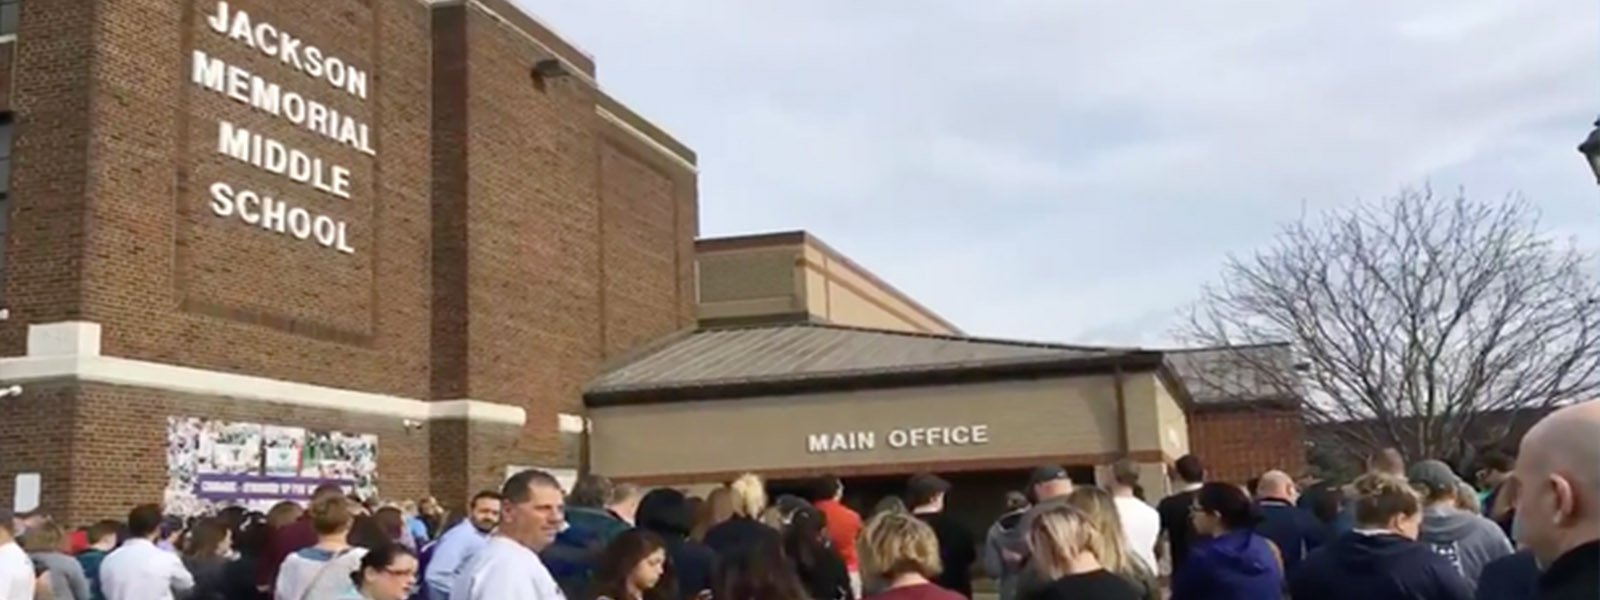 Ohio 7th Grader fatally shot himself in School 